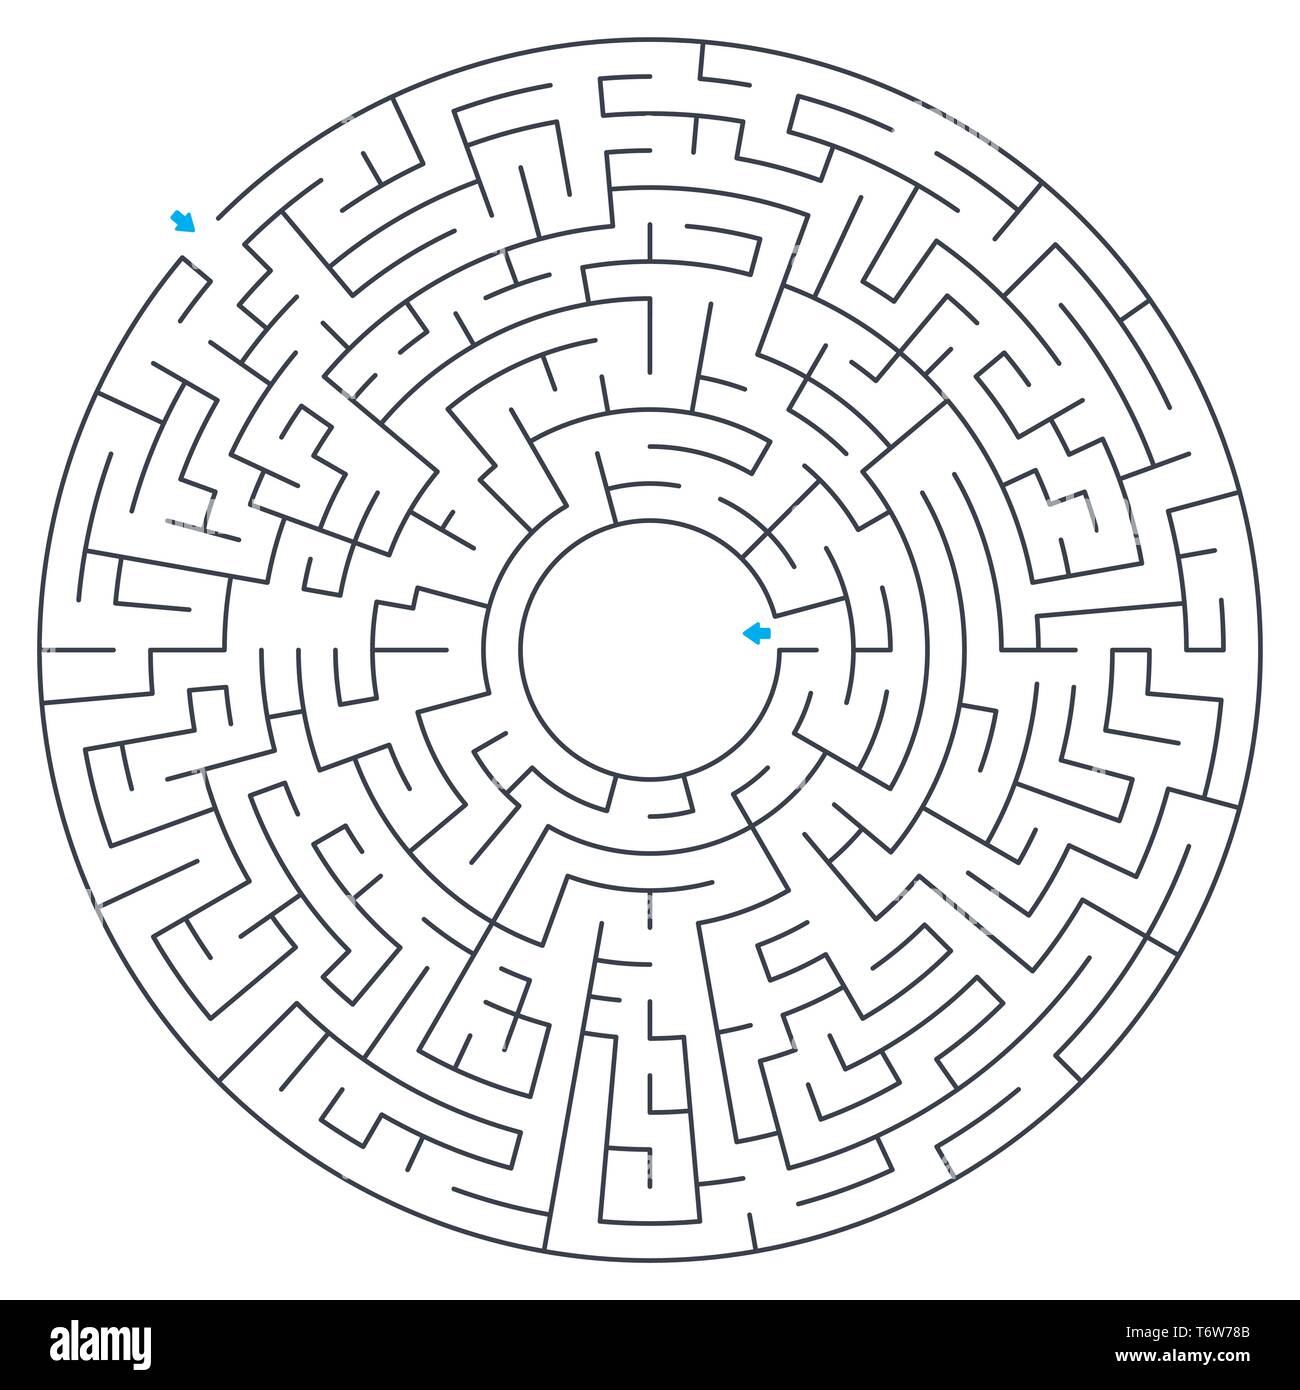 Maze, labyrinth, vector illustration. Round, circular maze. High quality vector. Stock Vector